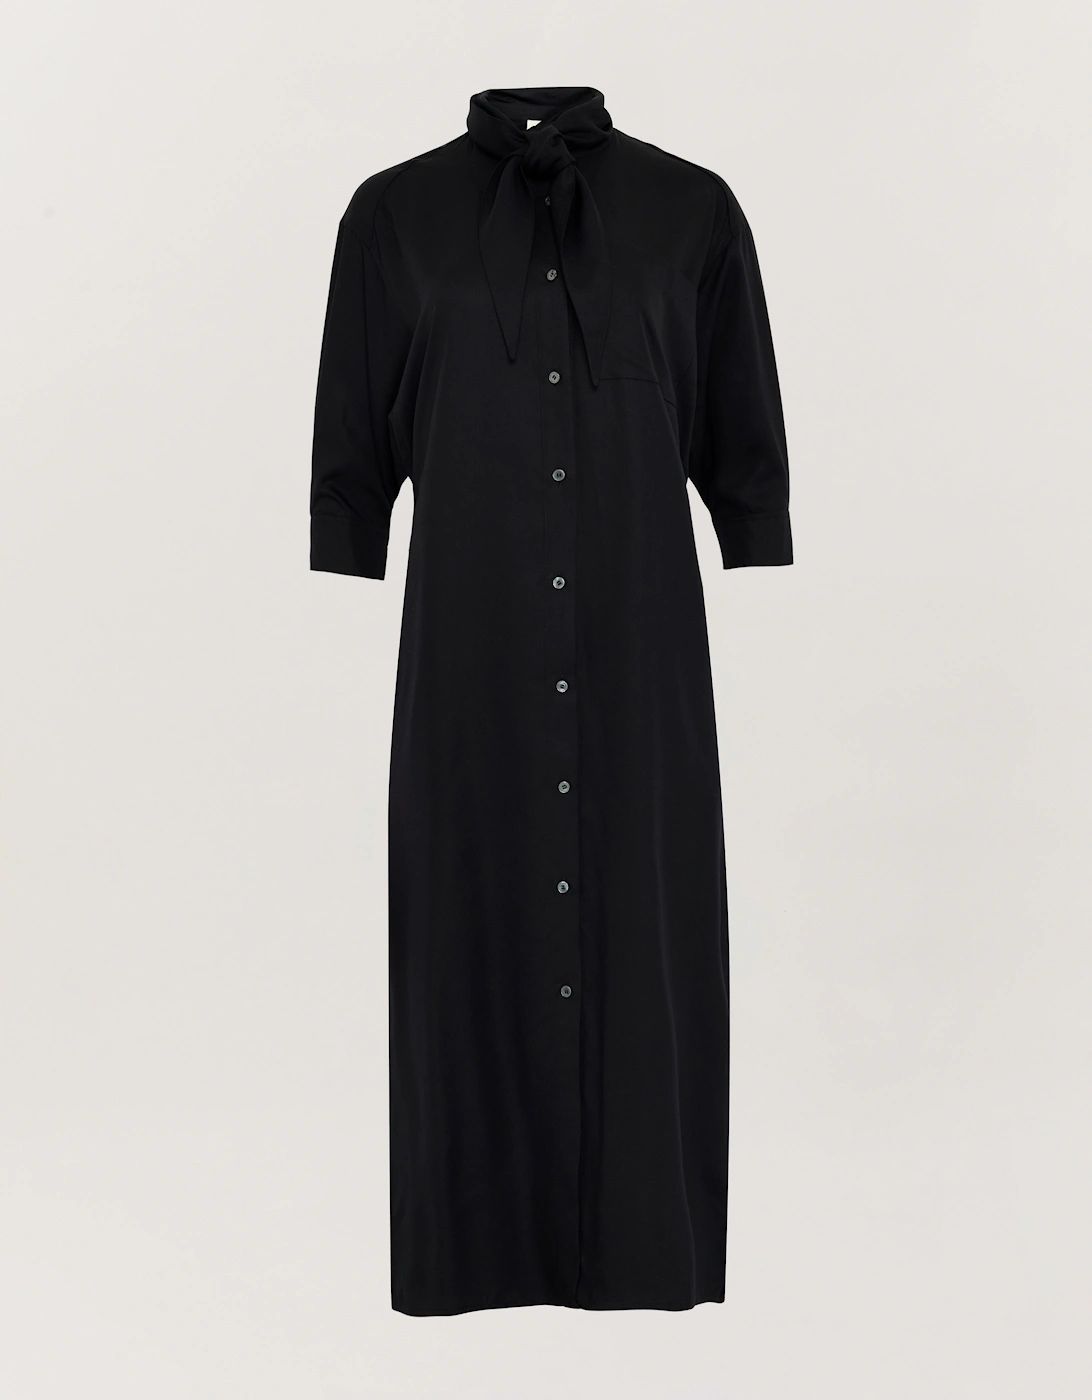 Argyl Dress in Black